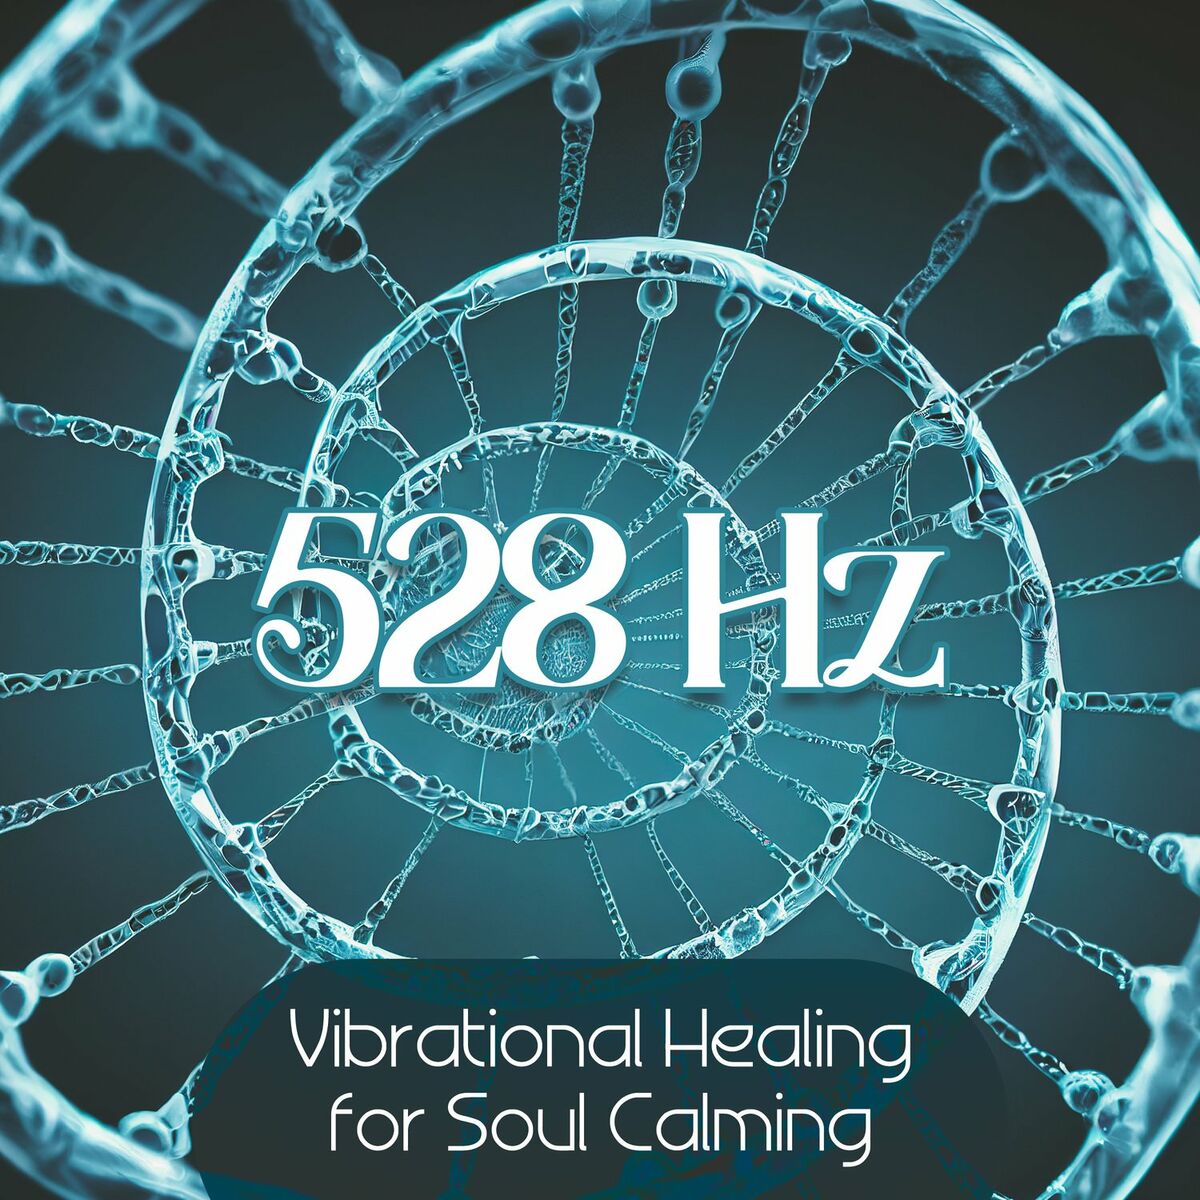 528 Hz Music: albums, songs, playlists | Listen on Deezer